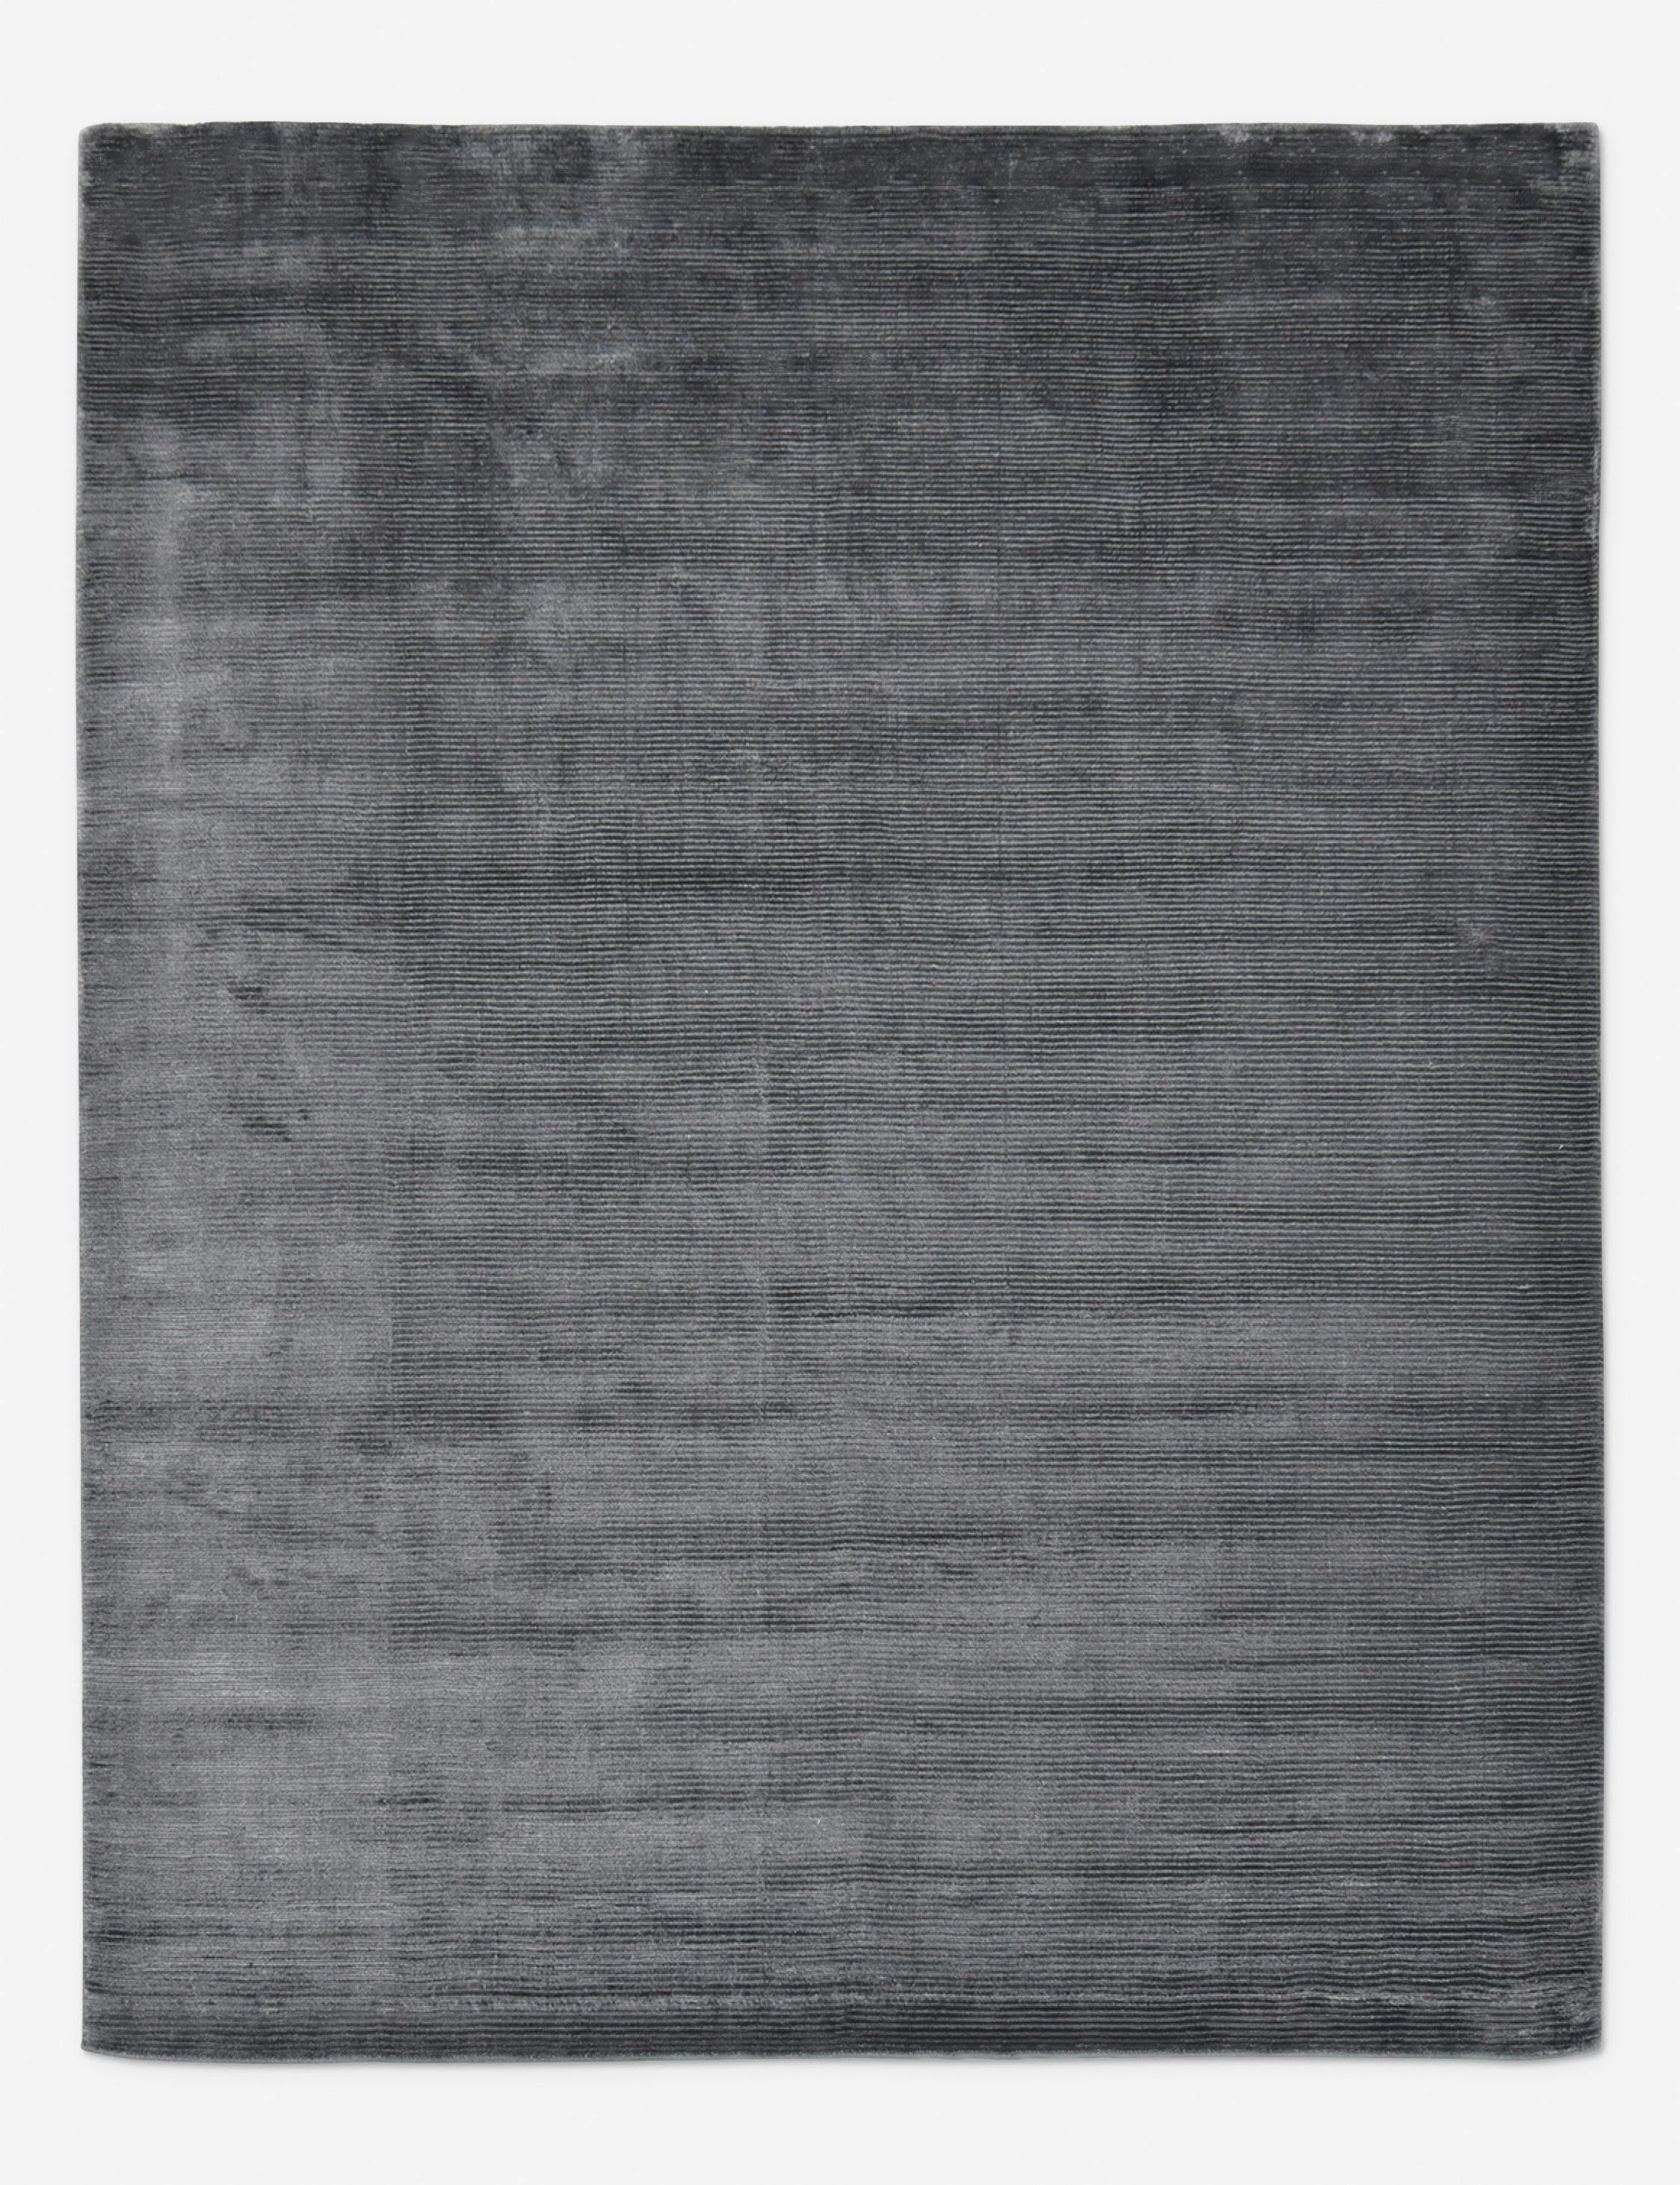 Elegant Cordi Dark Gray Hand-Knotted Wool-Blend 9' x 12' Area Rug